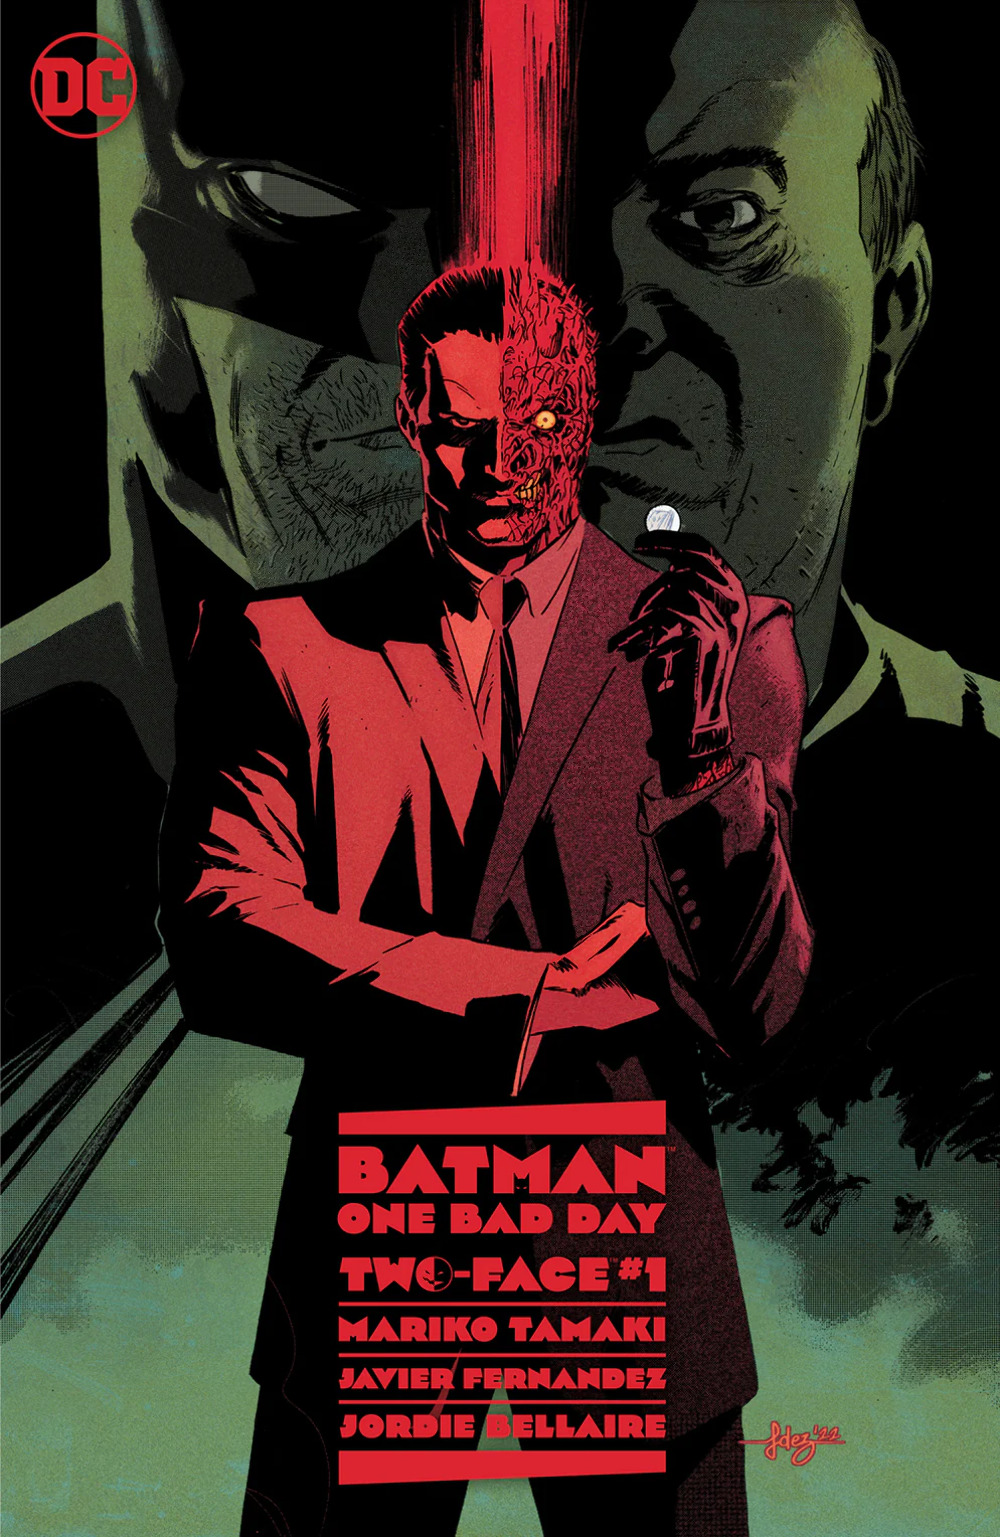 Batman One Bad Day Two-Face #1 (One Shot) A Javier Fernandez Mariko Tamaki (09/2